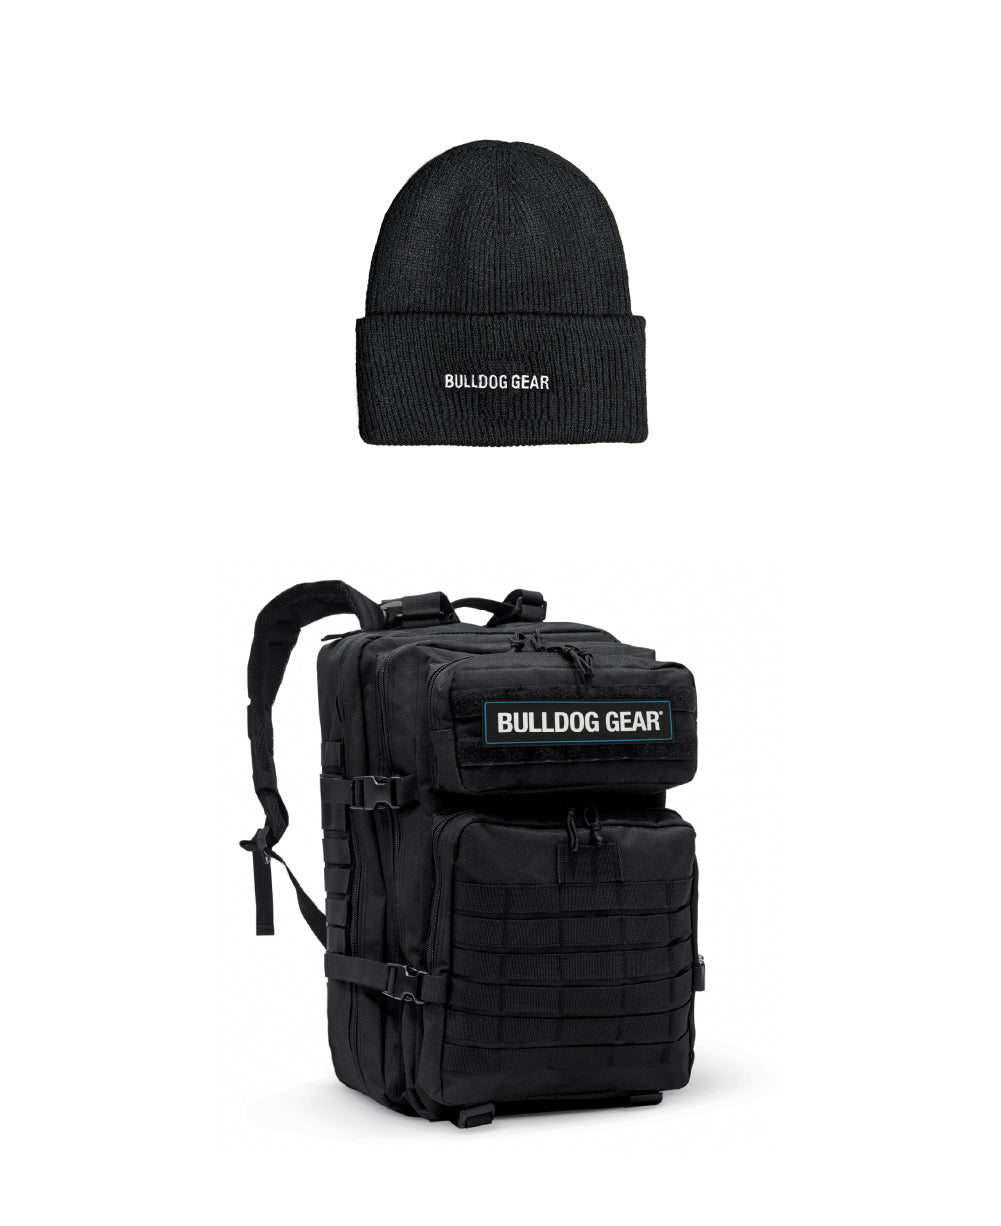 Bulldog Gear tactical backpack and beanie bundle